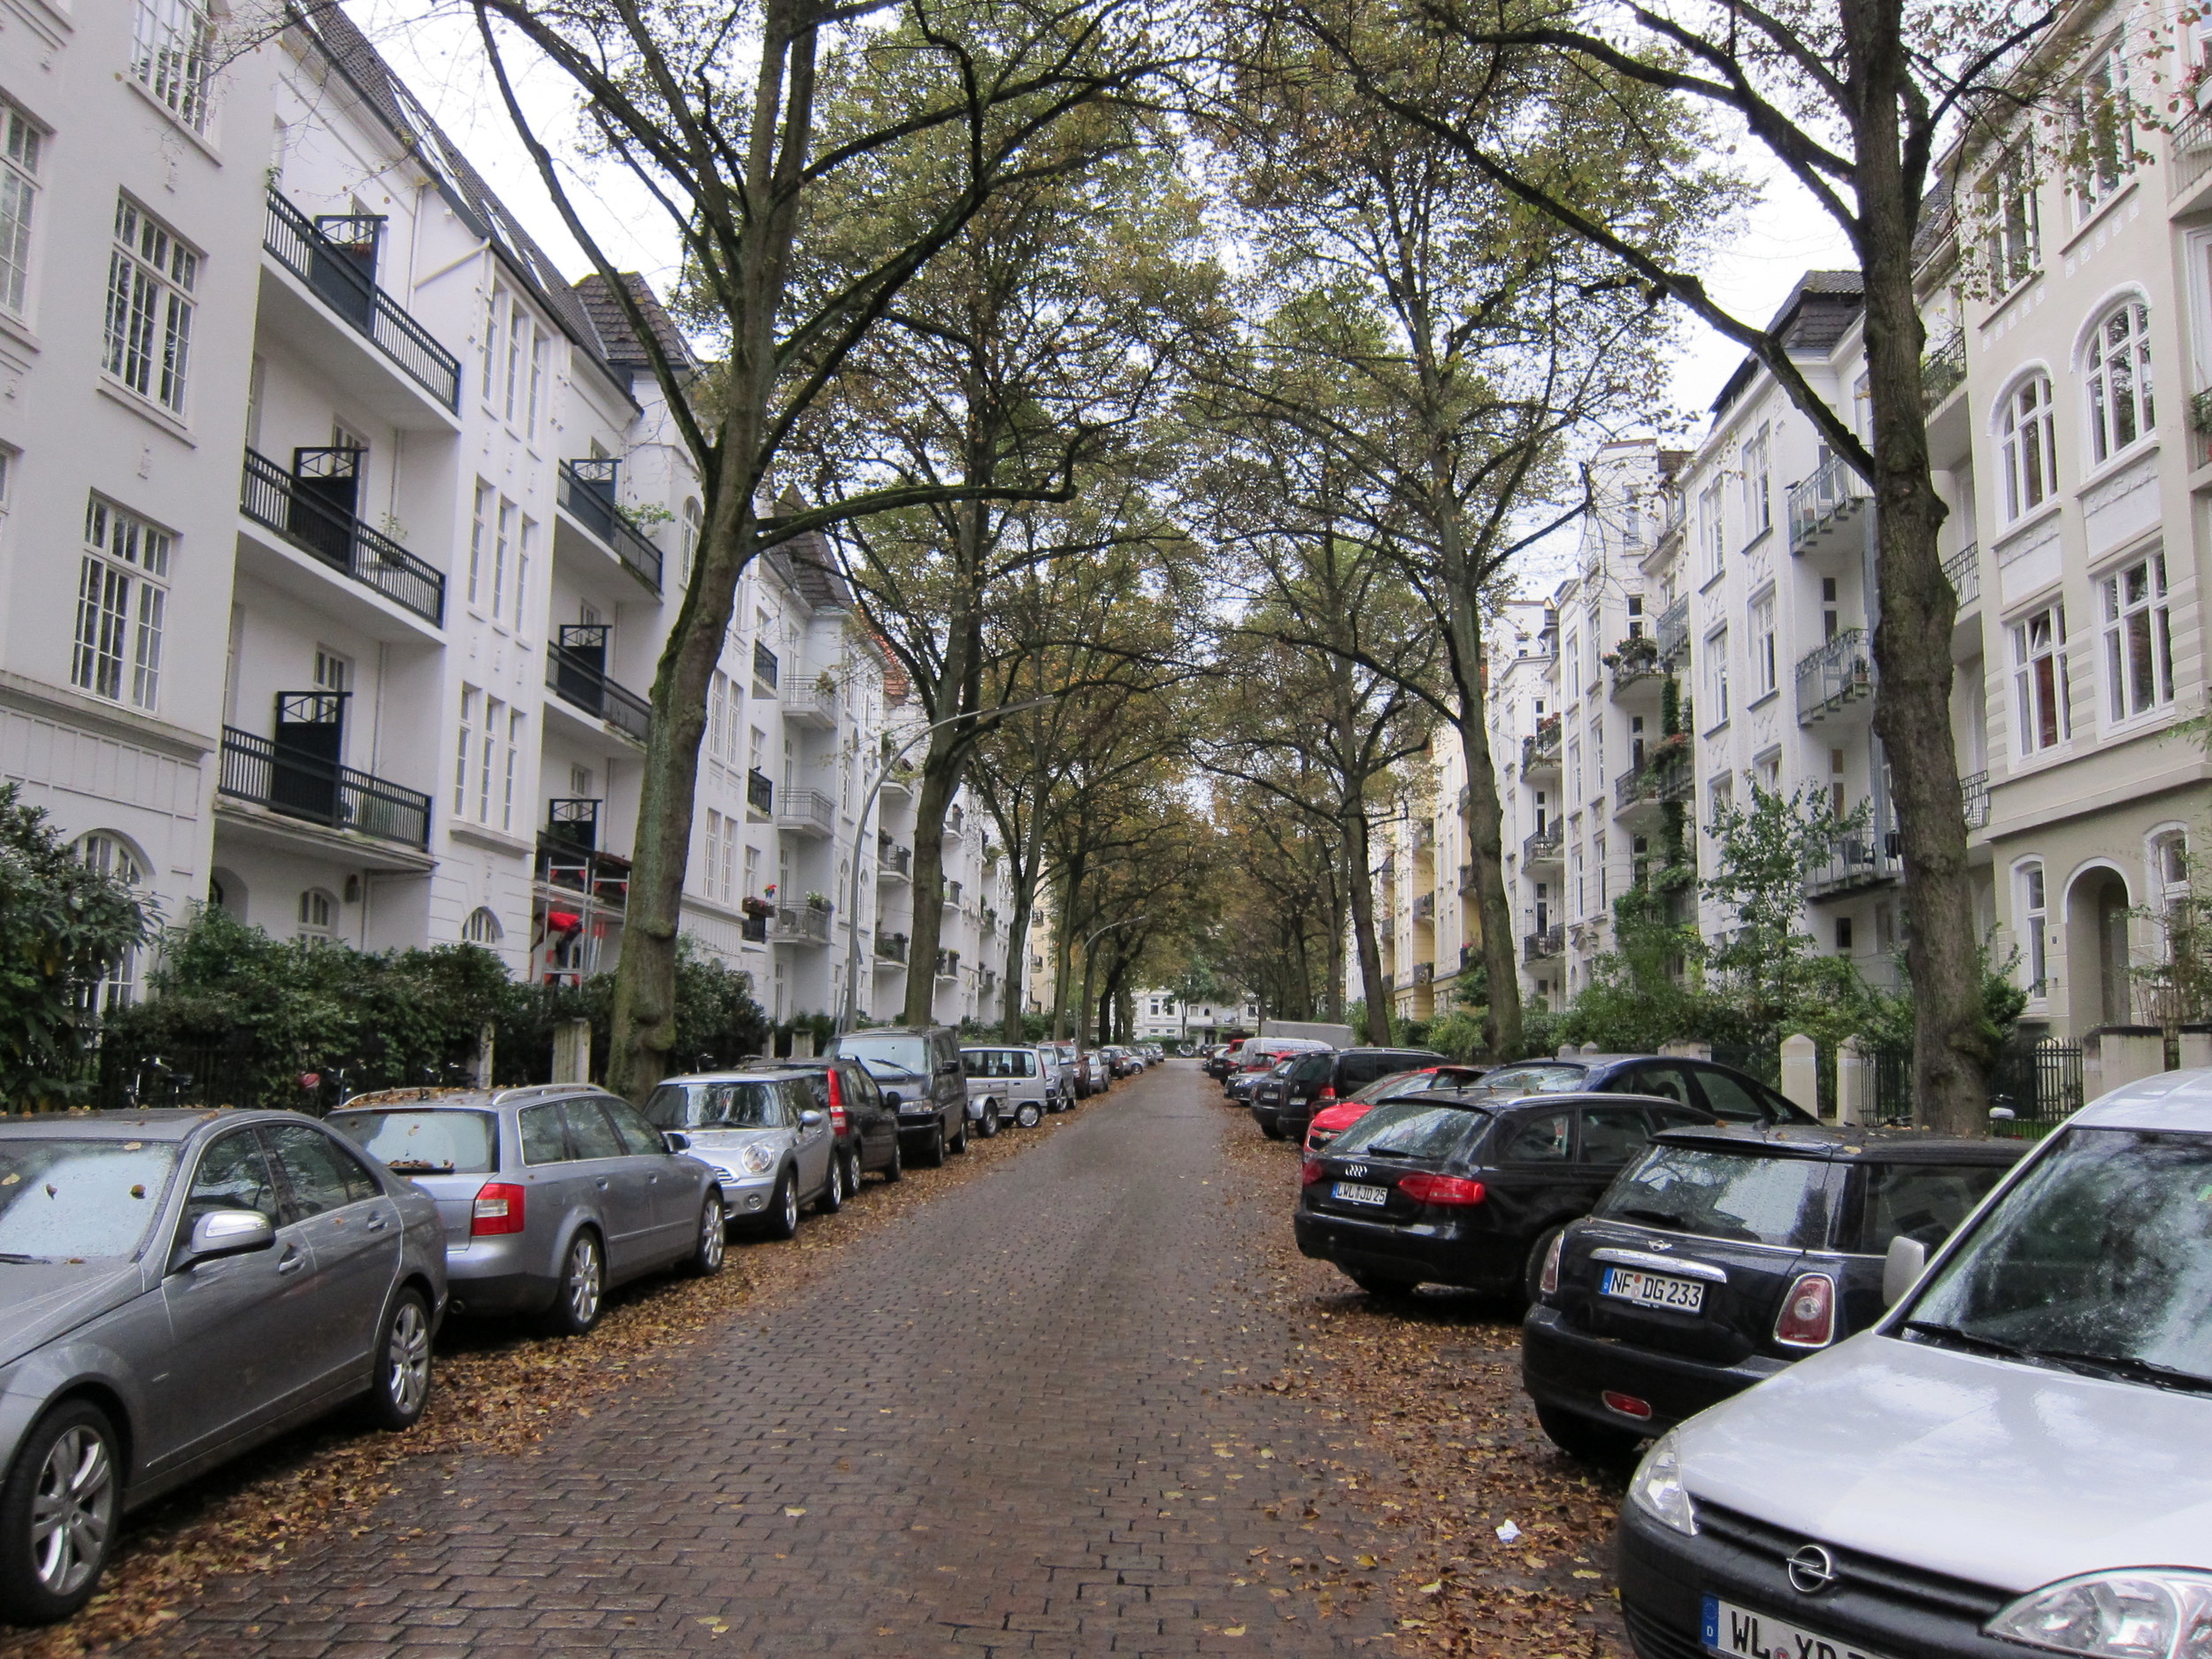  2012, Hamburg, where I lived for two weeks. 